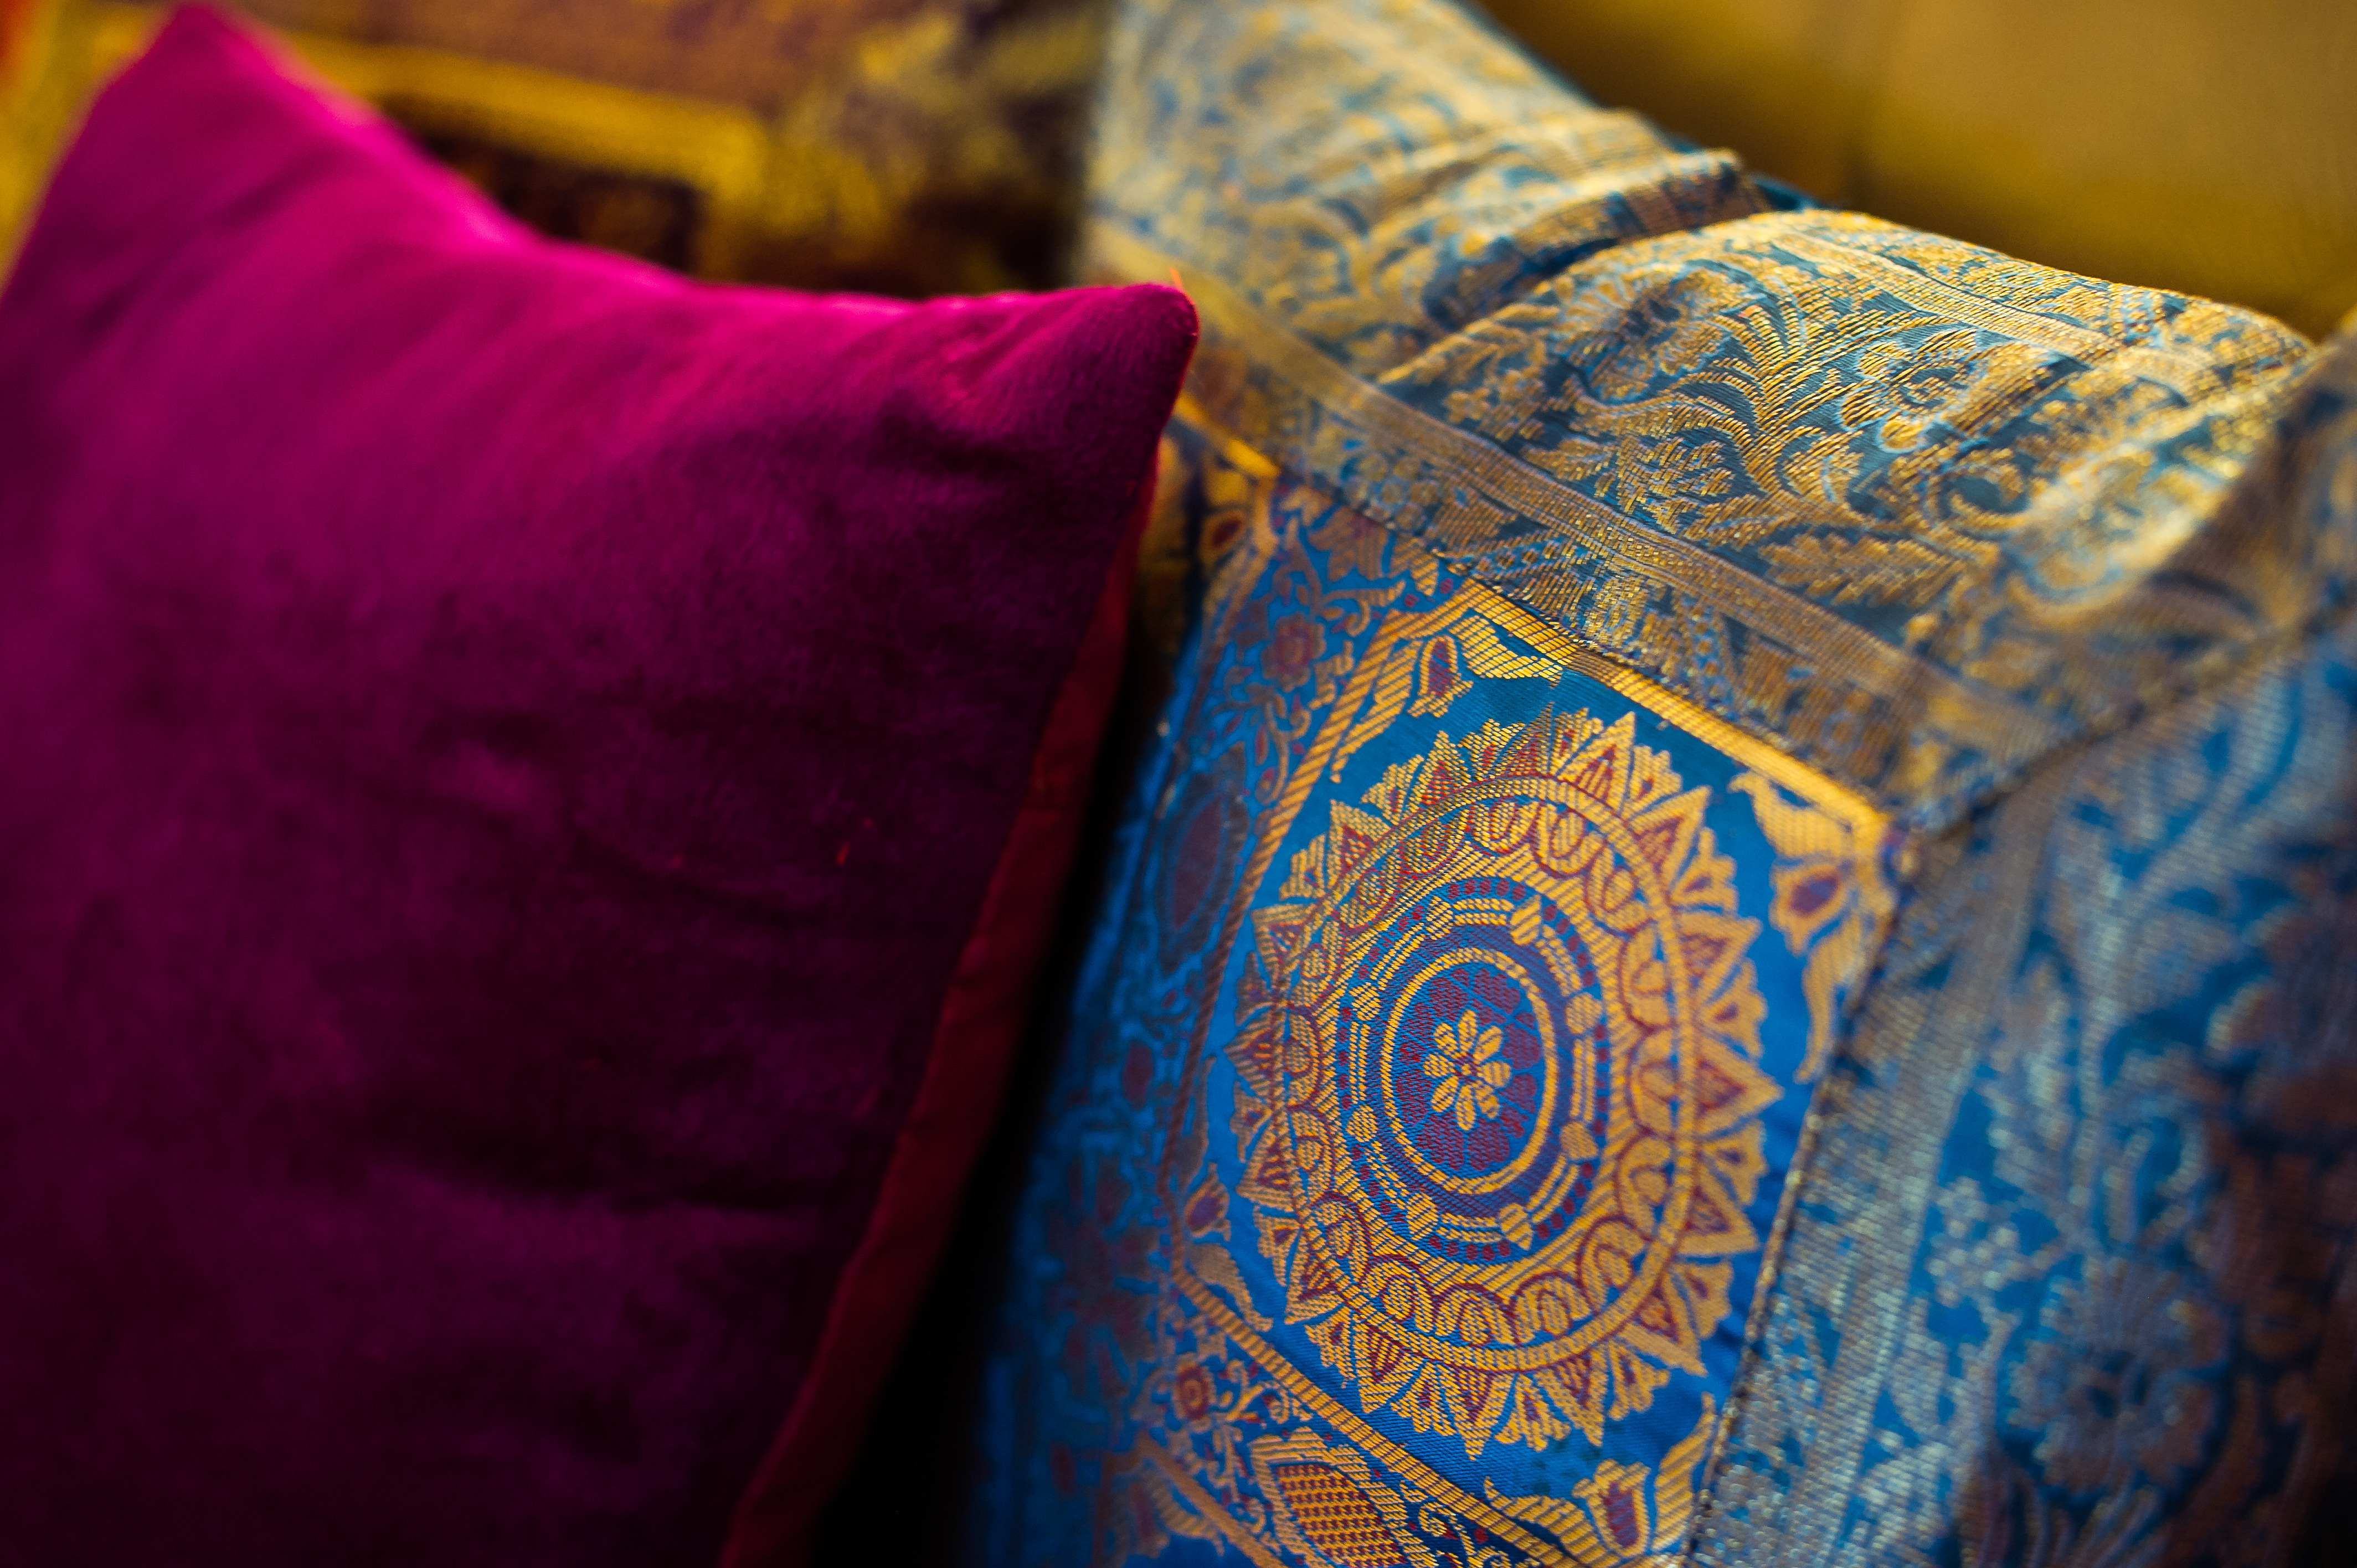 ethnic cushion covers